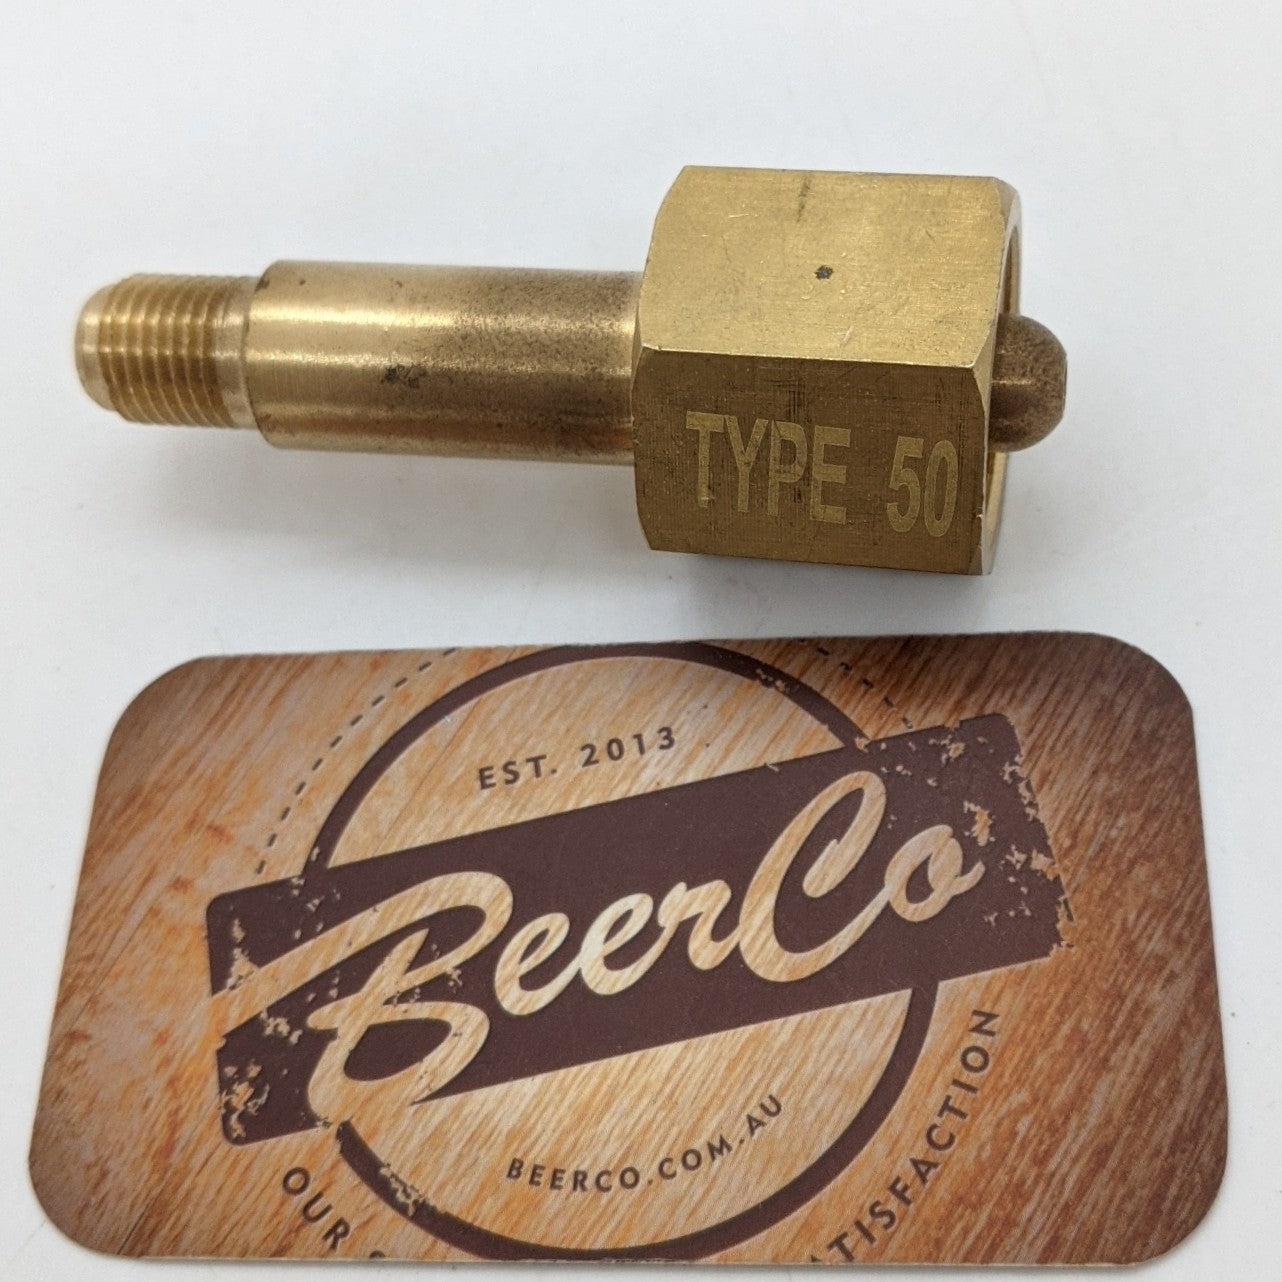 Type 50 | 1/4 inch thread nut & stem